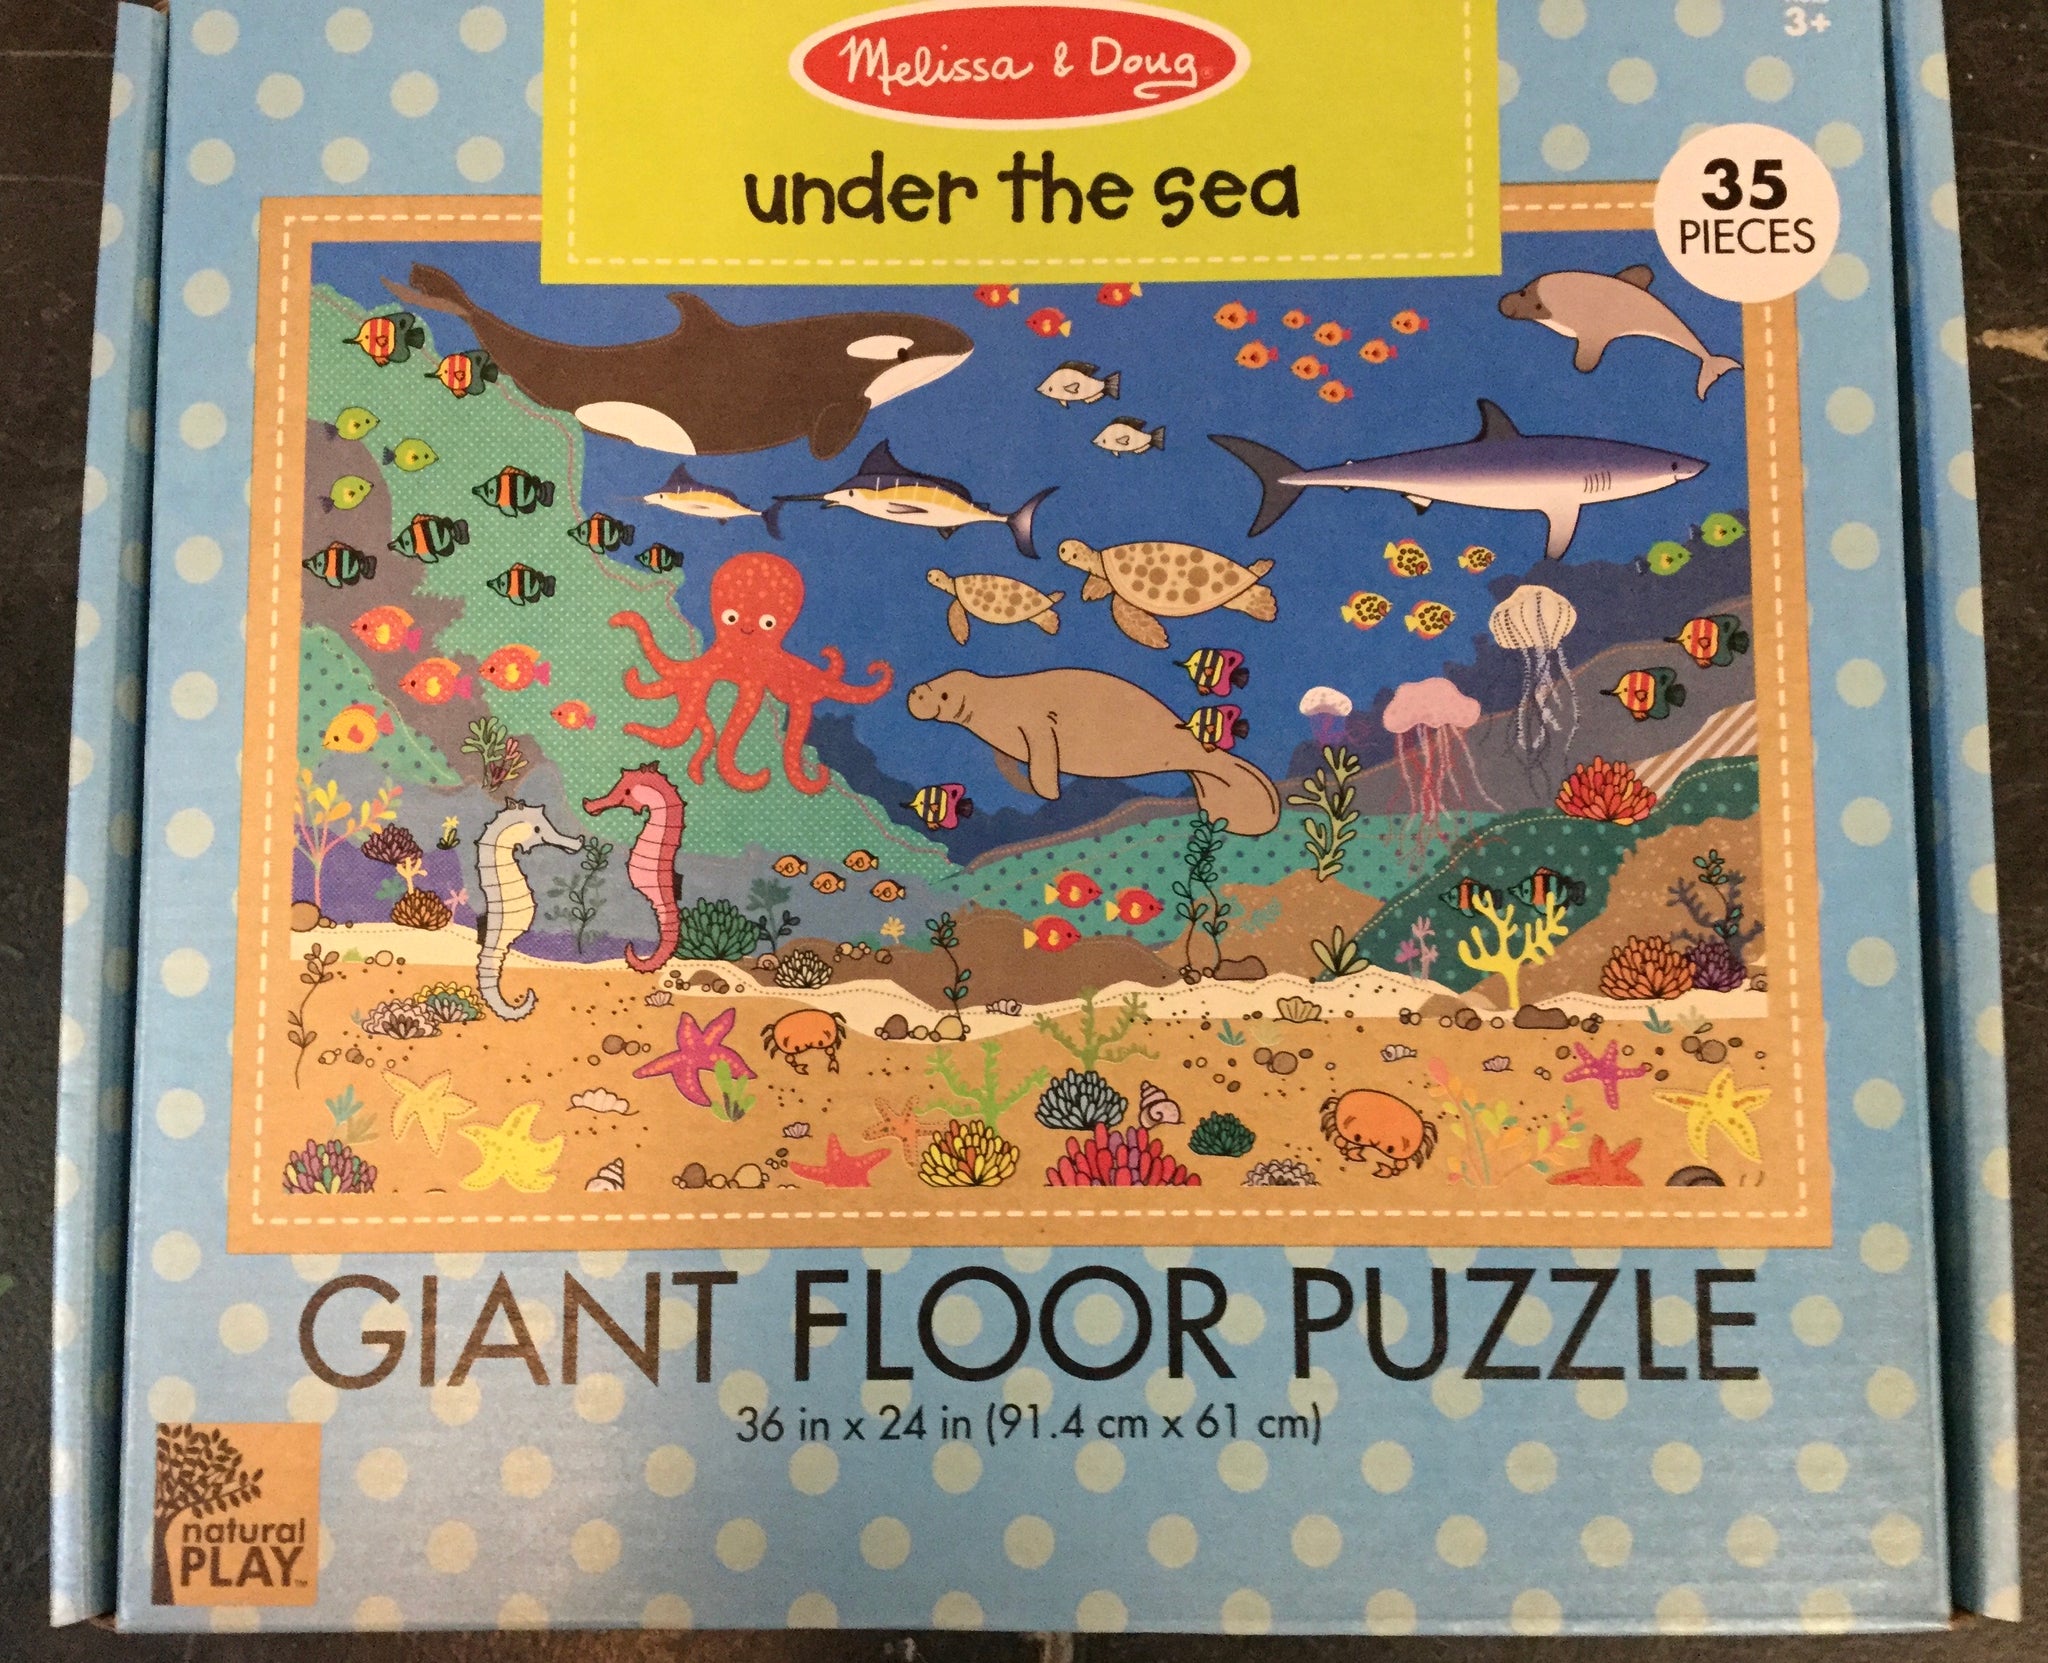 Under the Sea Giant Floor Puzzle